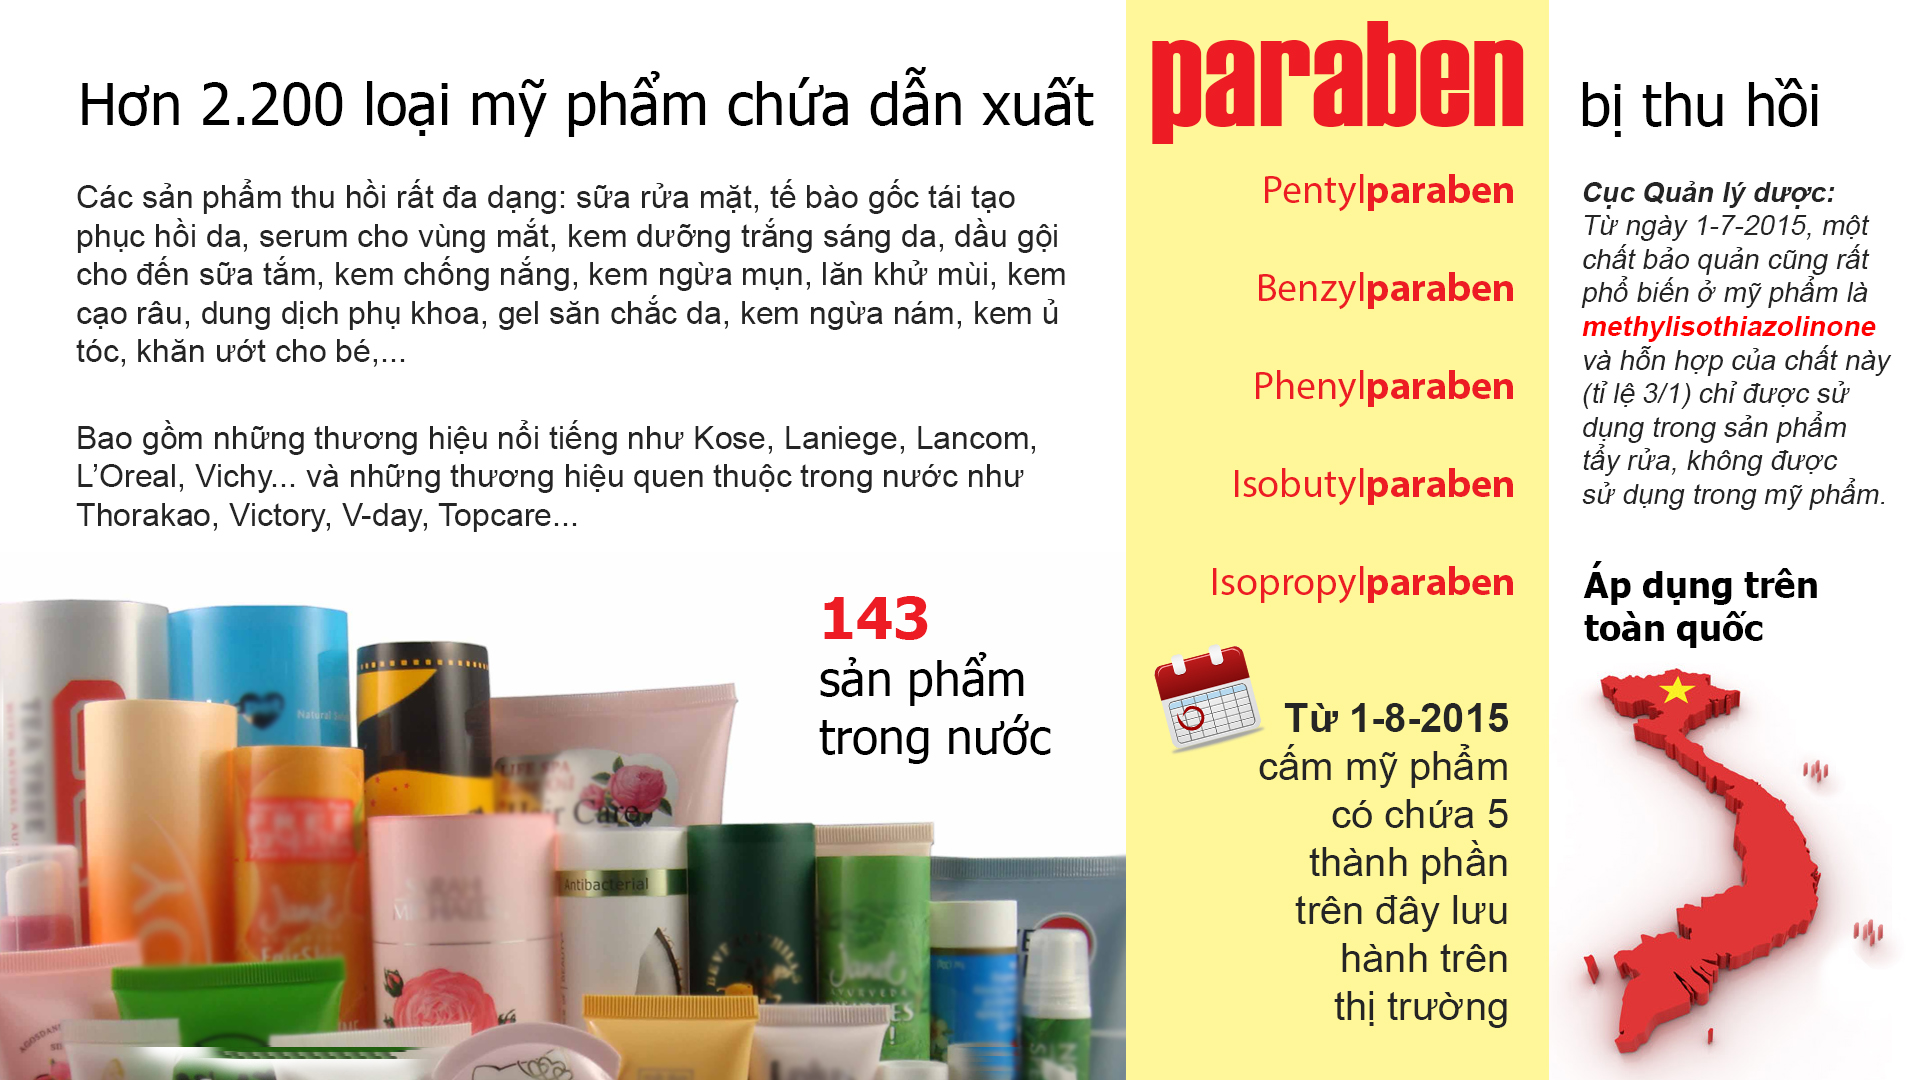 Thu hồi sản phẩm chứa Paraben ra sao?